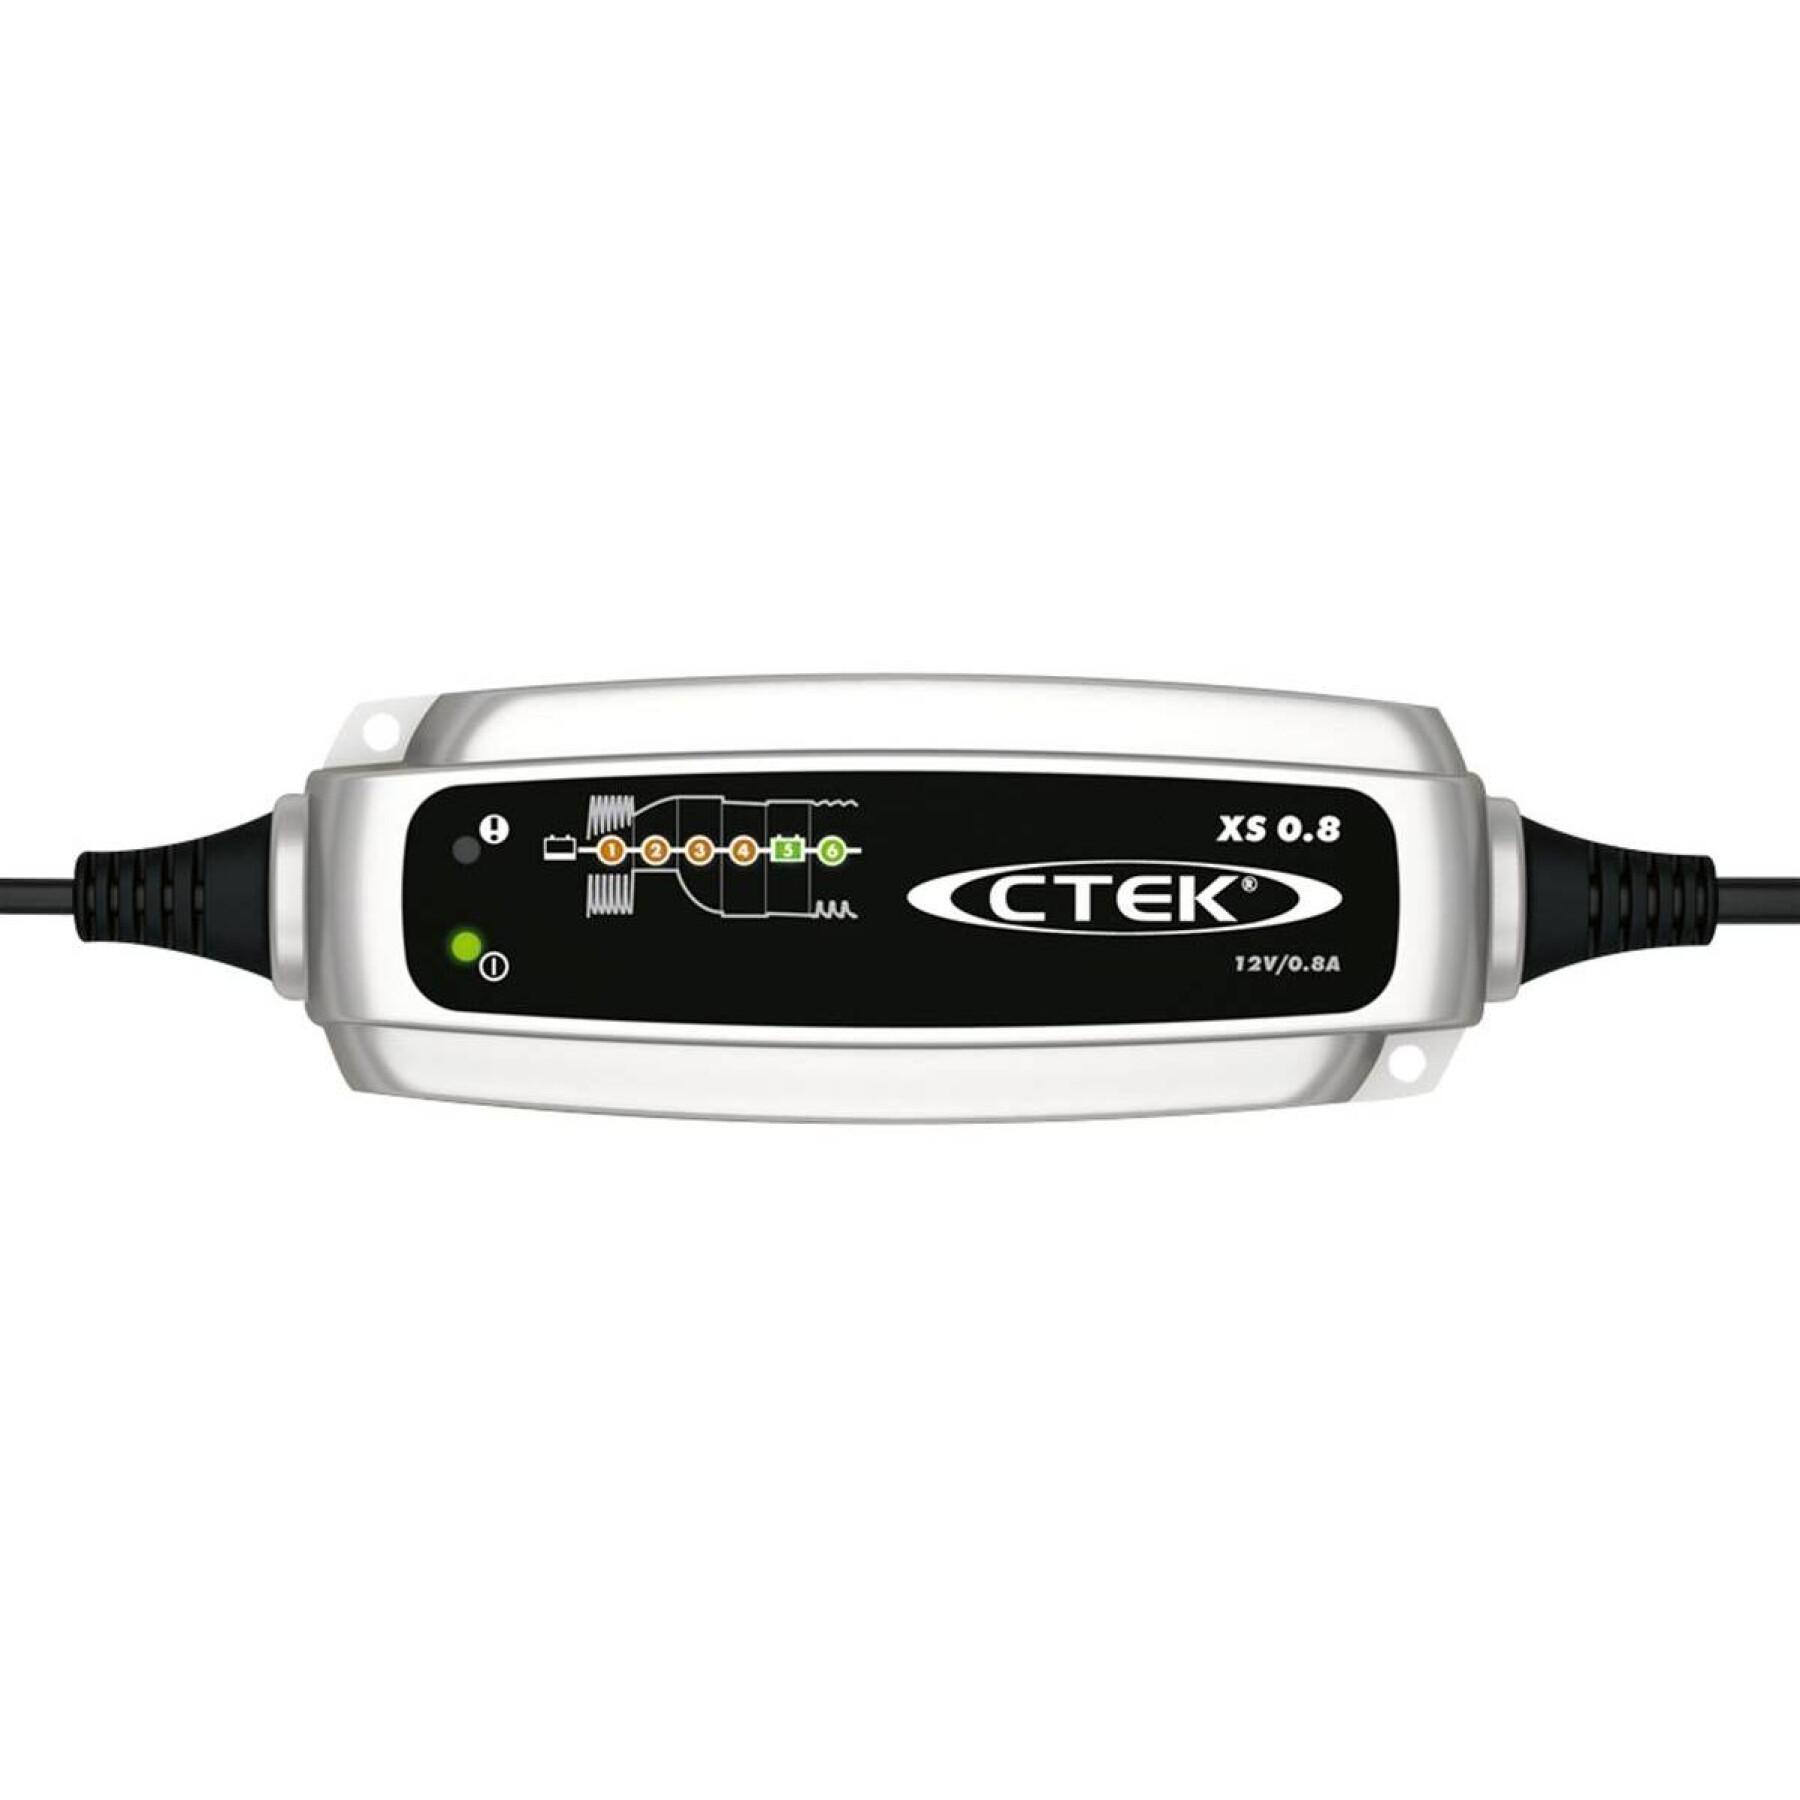 Motorrad-Batterieladegerät Ctek XS 0.8 EU